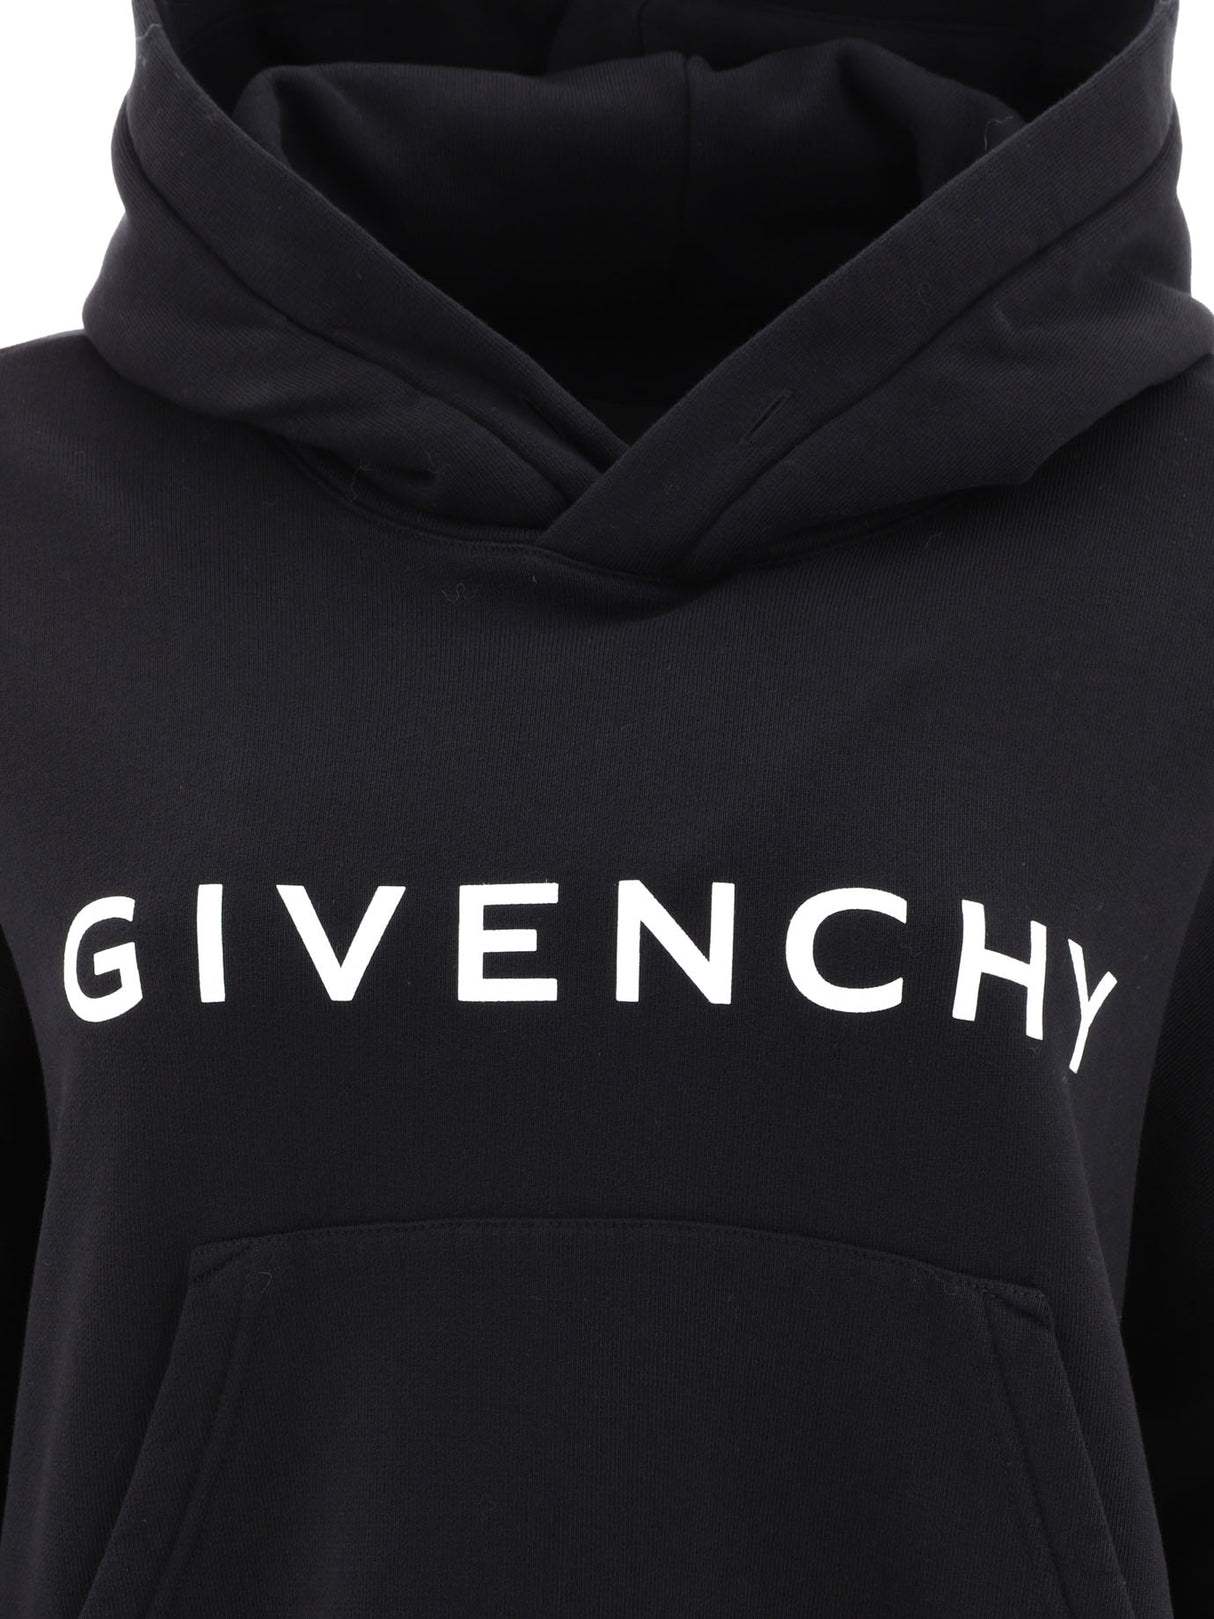 原创：Givenchy徽标纯棉宽松短款连帽卫衣